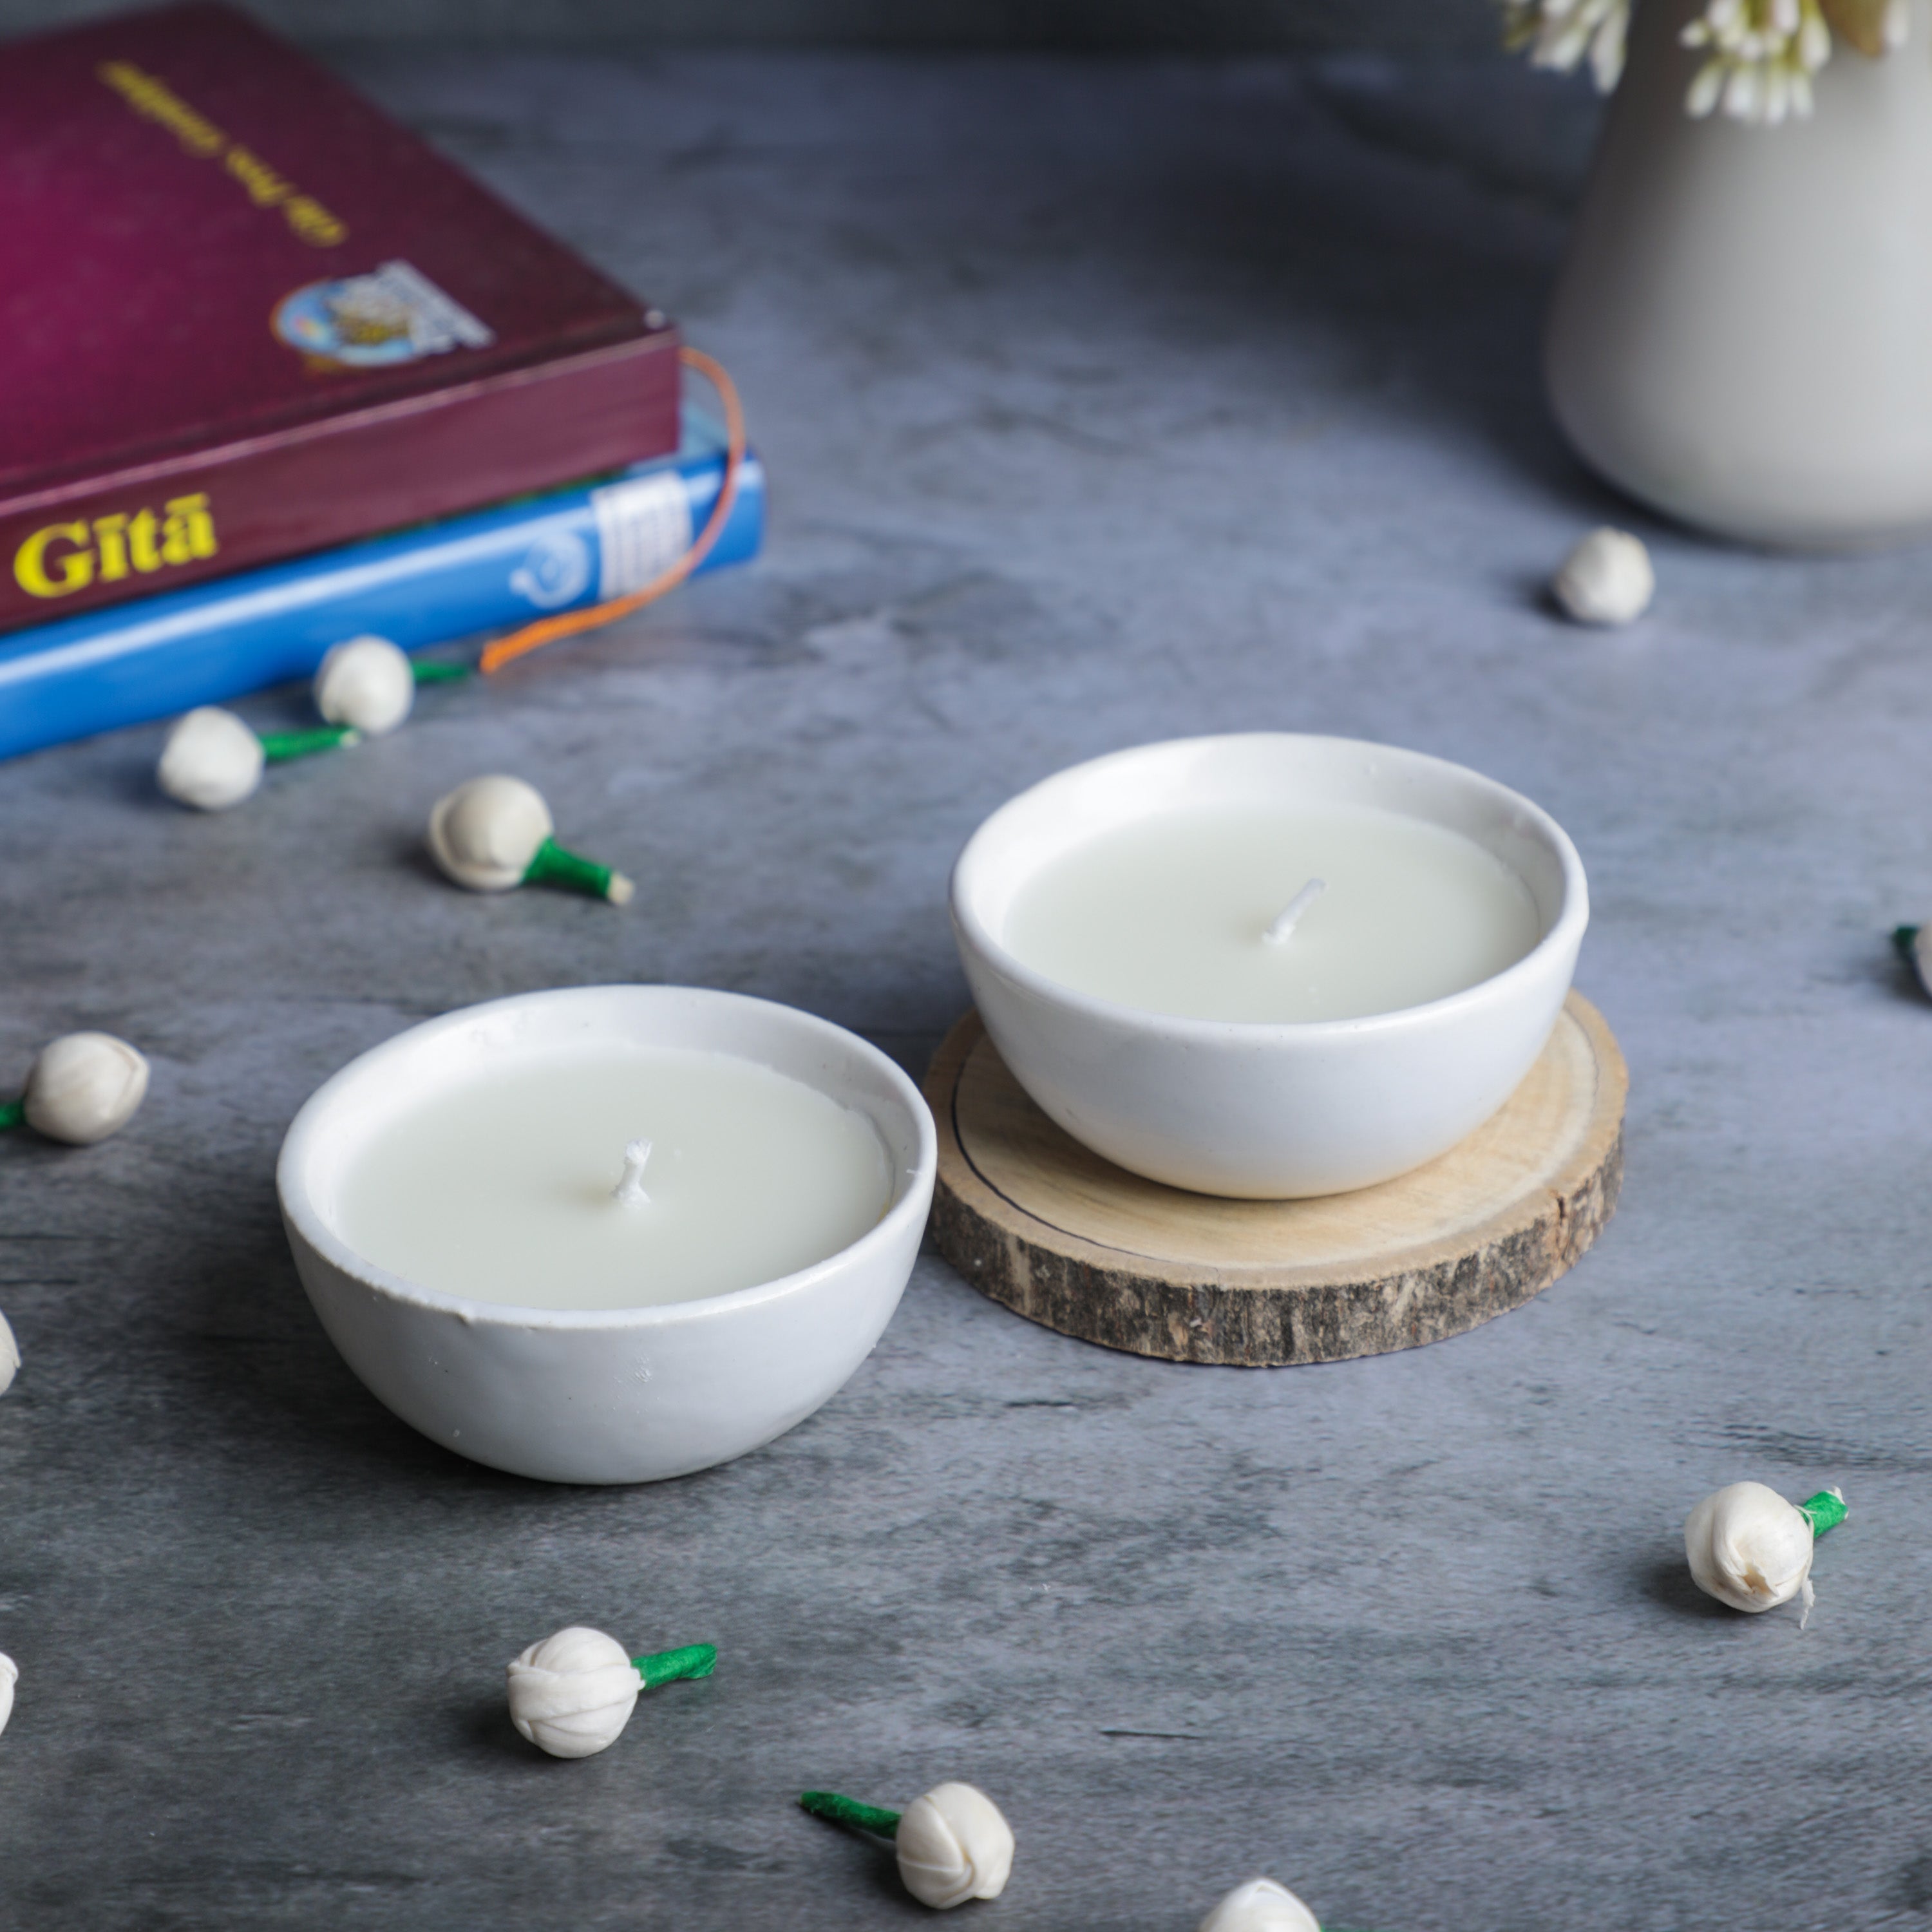 jasmine scented candles in ceramic bowl